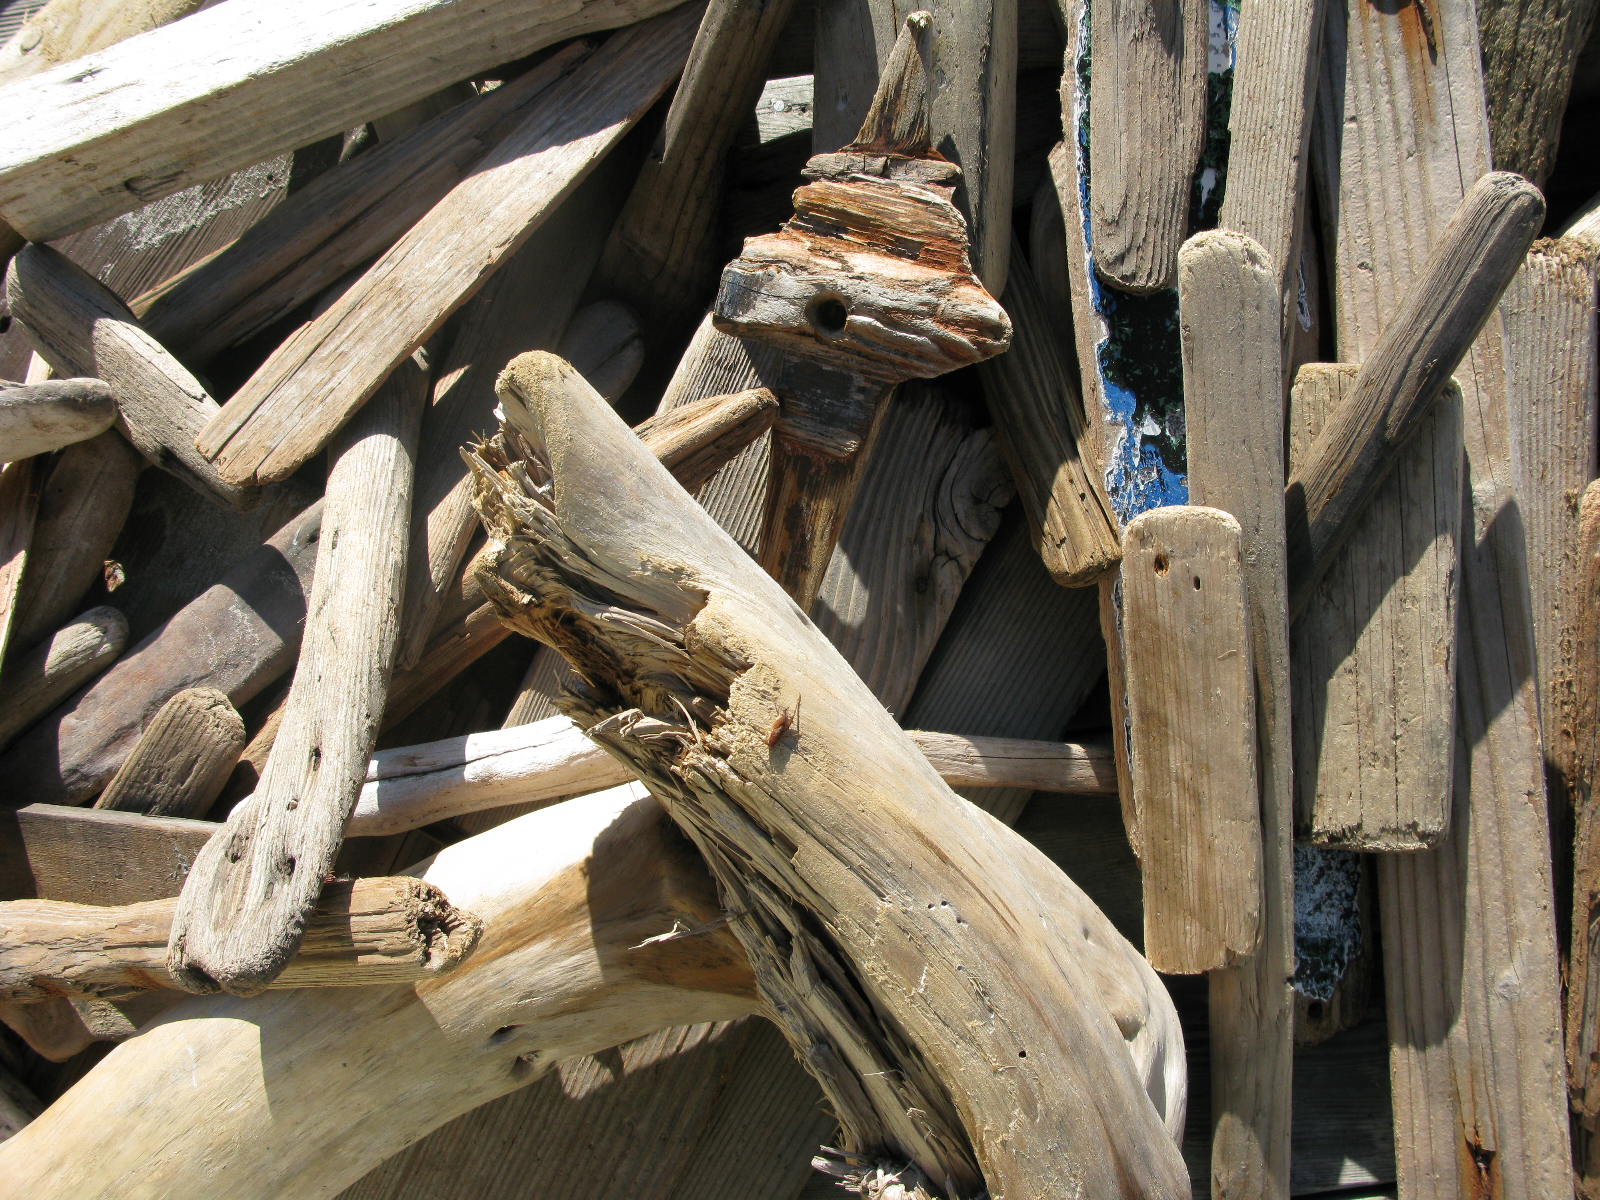 driftwood pile